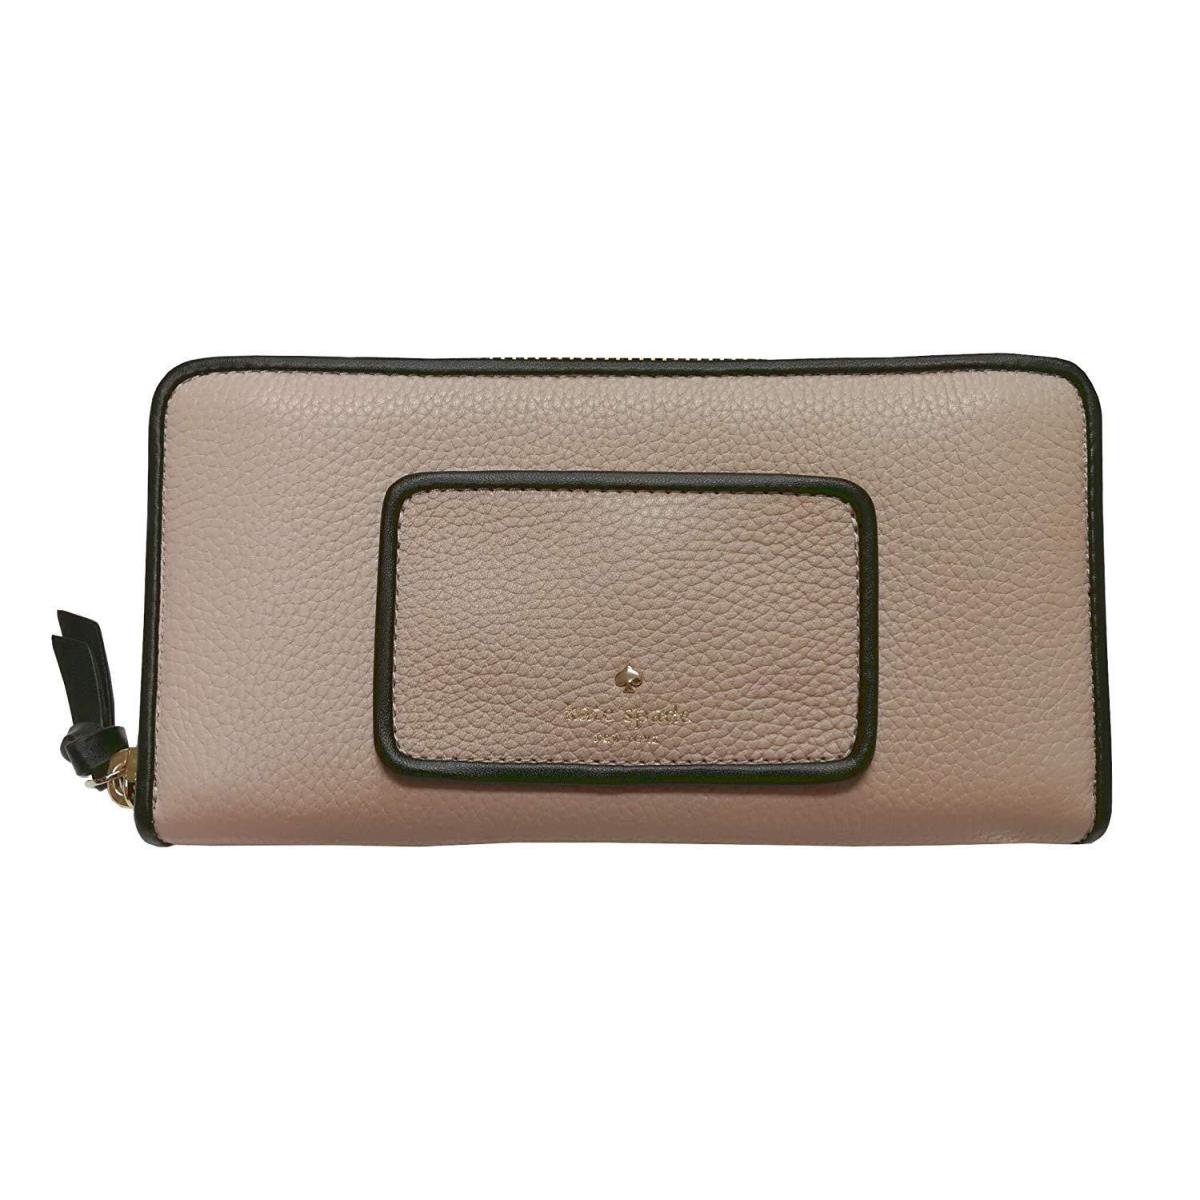 Kate Spade Neda Beige Pebbled Leather Ziparound Wallet WLRU4985 Retail - Beige